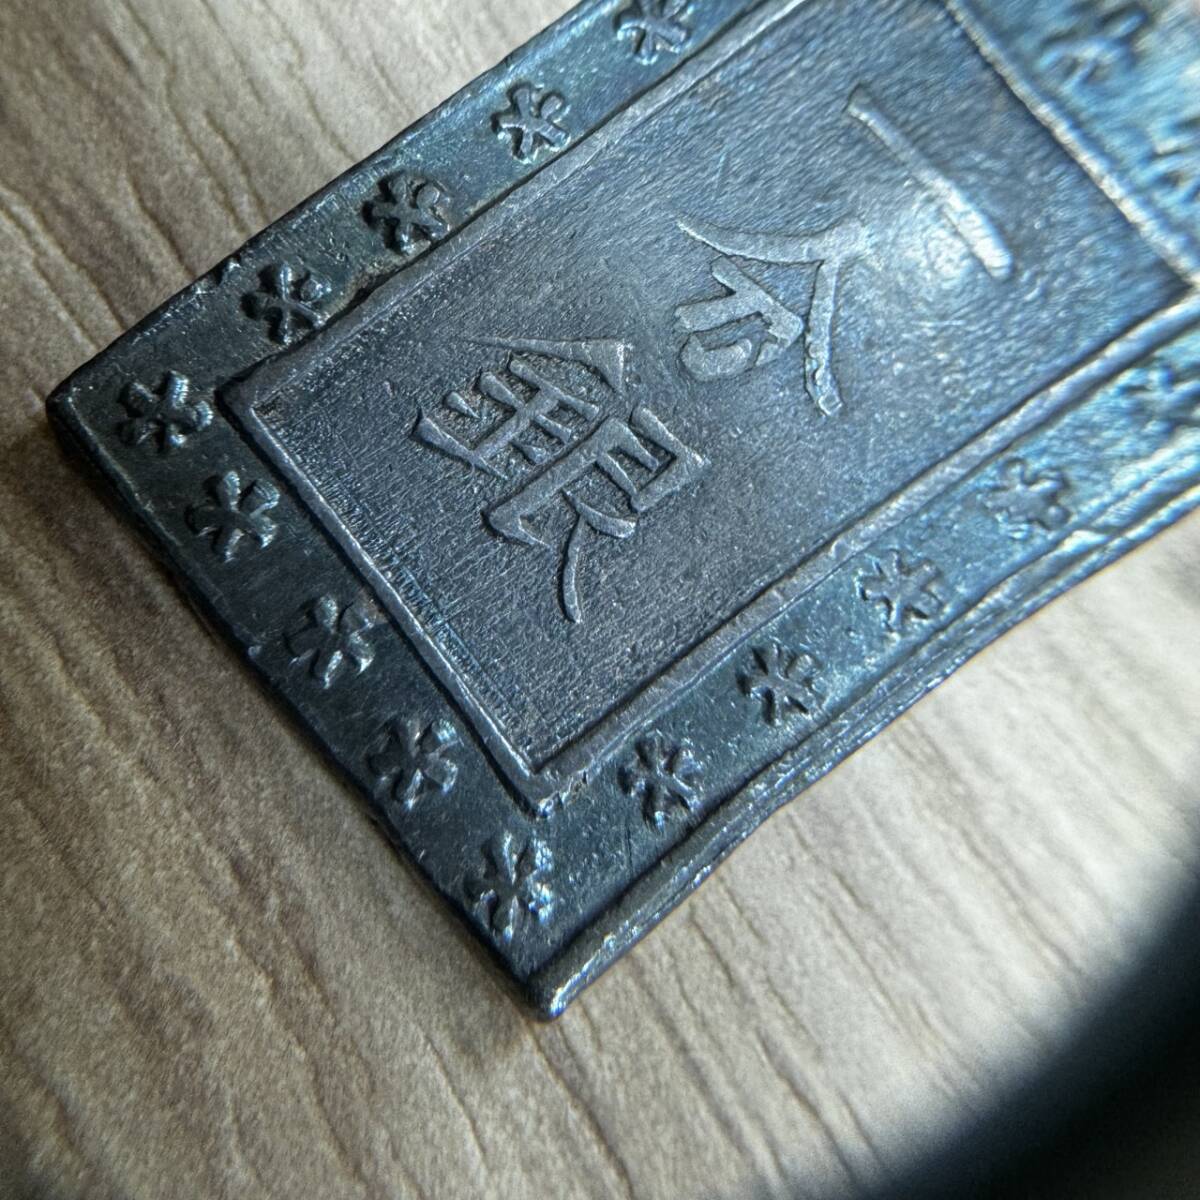 【GSA-156】1円～一分銀 銀座常是 銀貨 硬貨 貨幣 約8.6g 古銭 日本 骨董品 貿易銀 江戸時代 小判 アンティーク の画像4